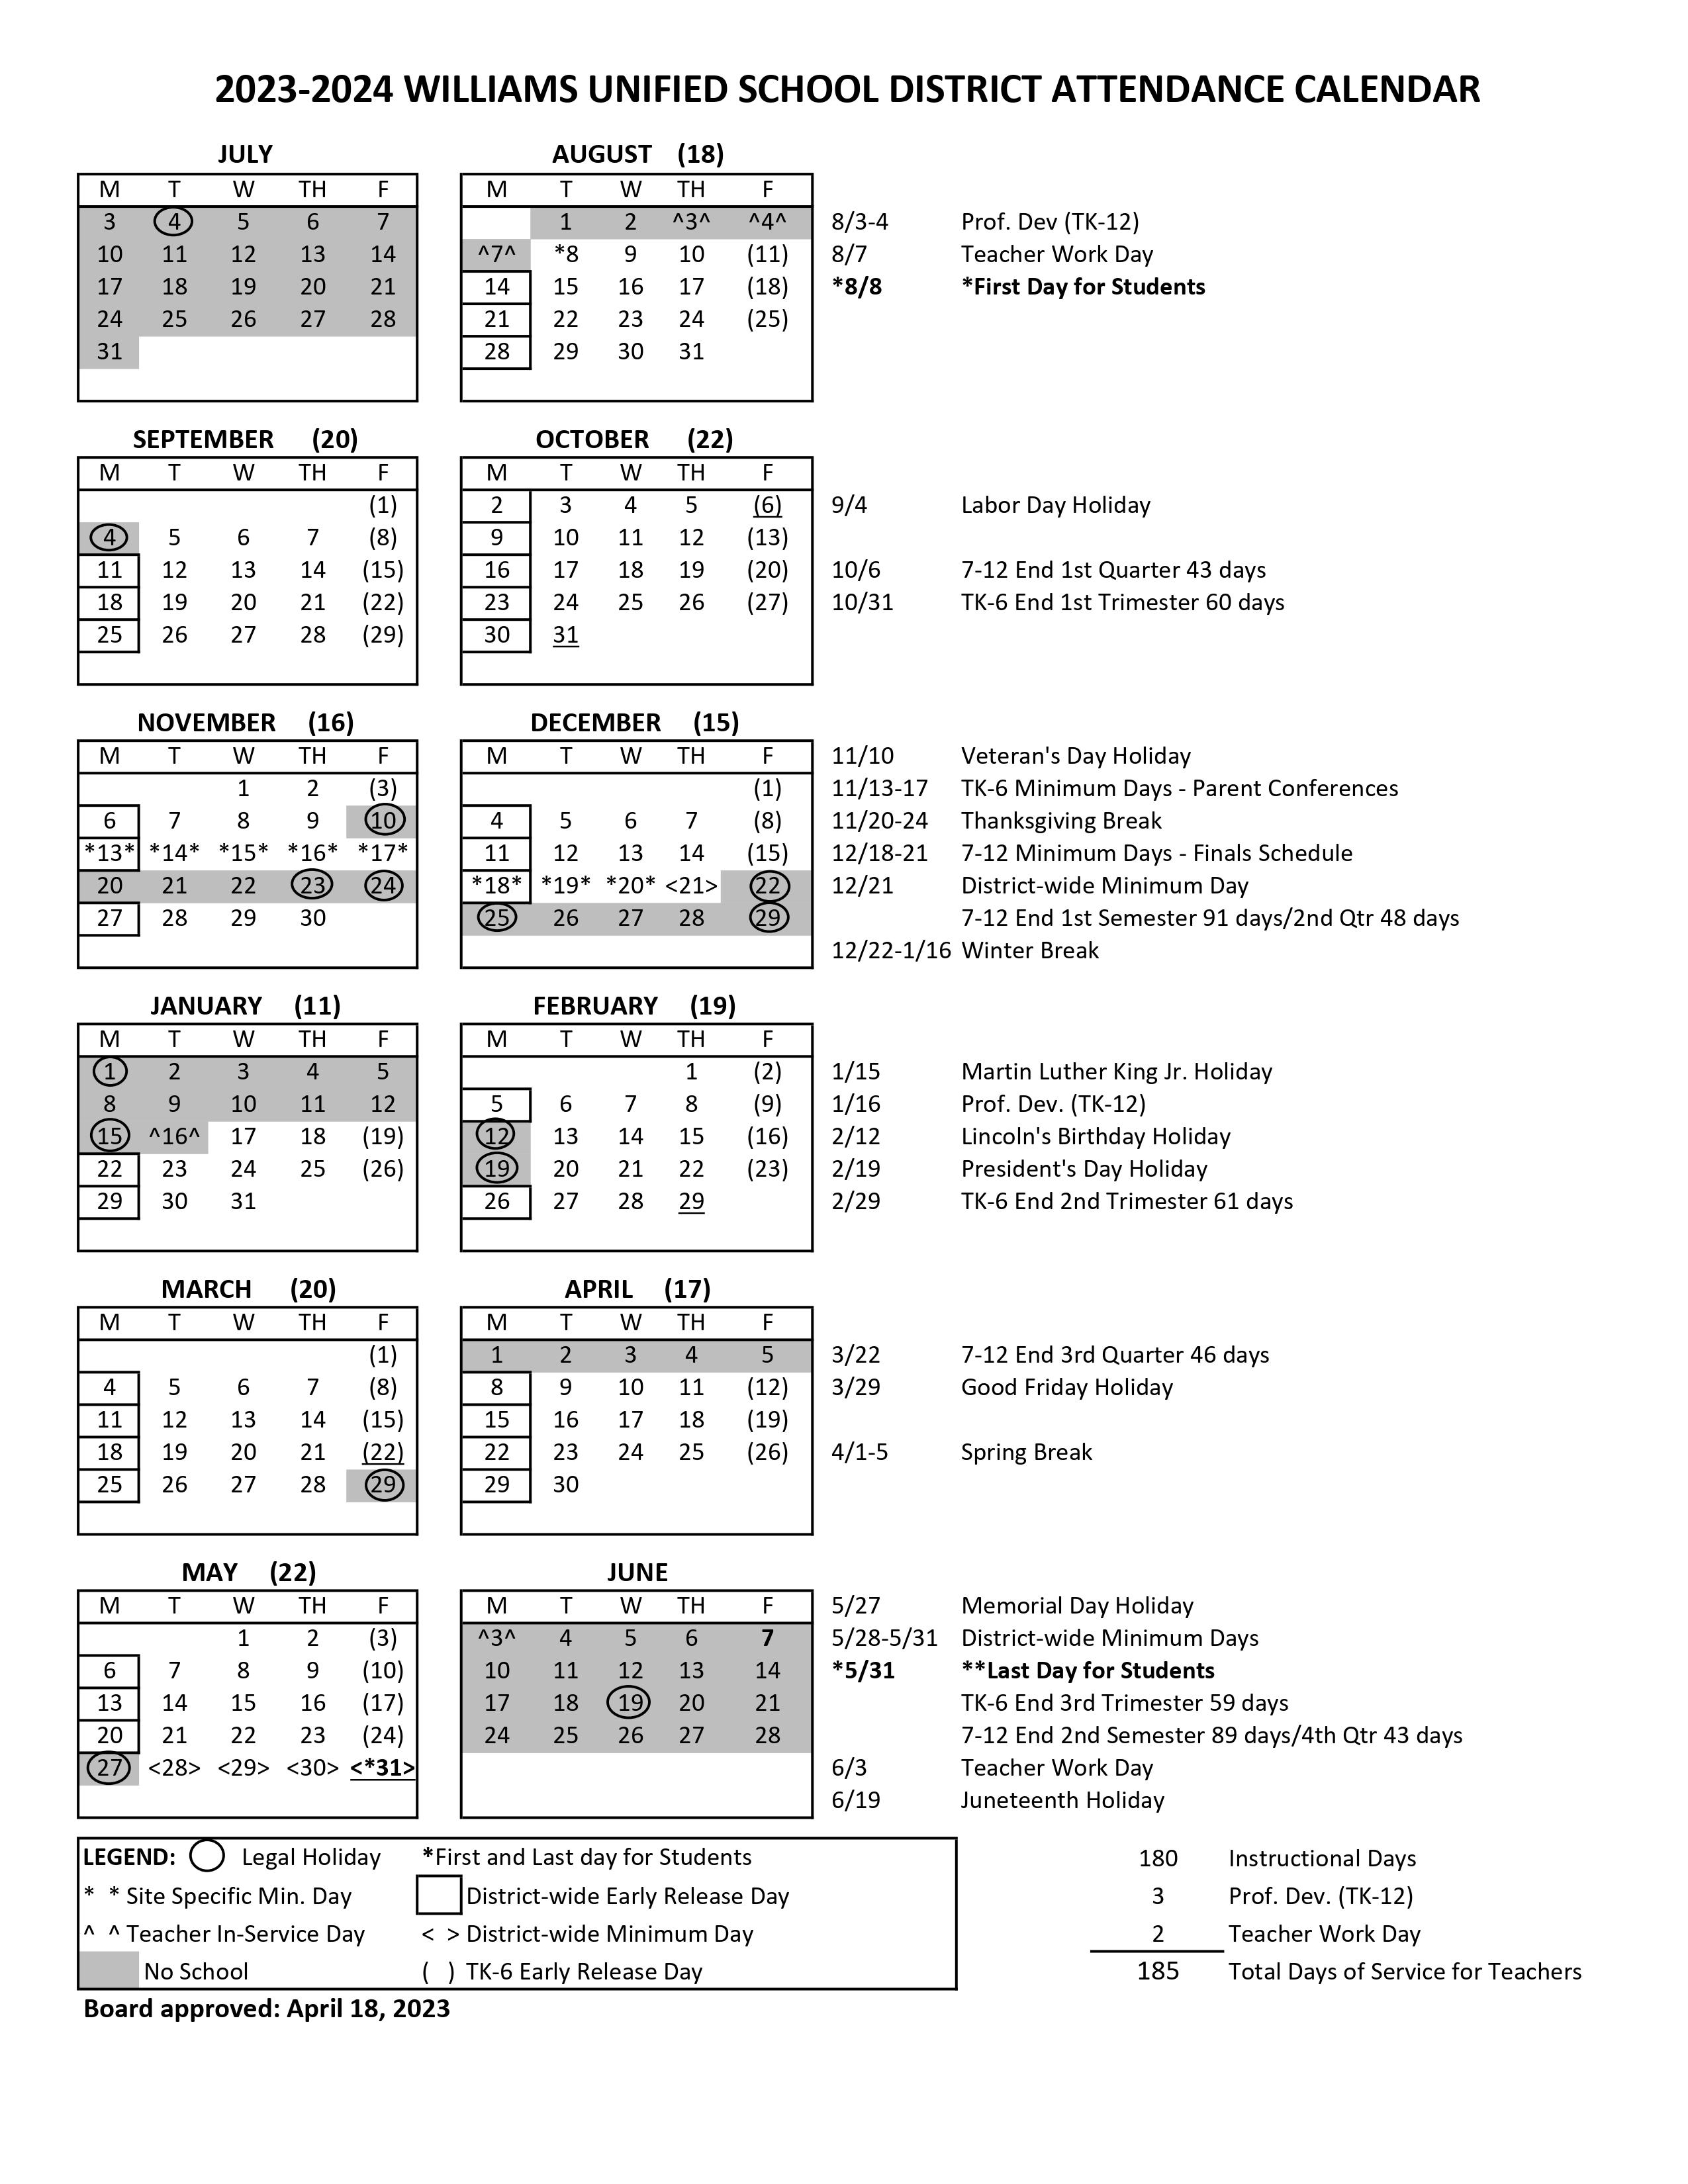 williams-junior-senior-high-school-2023-2024-district-calendar